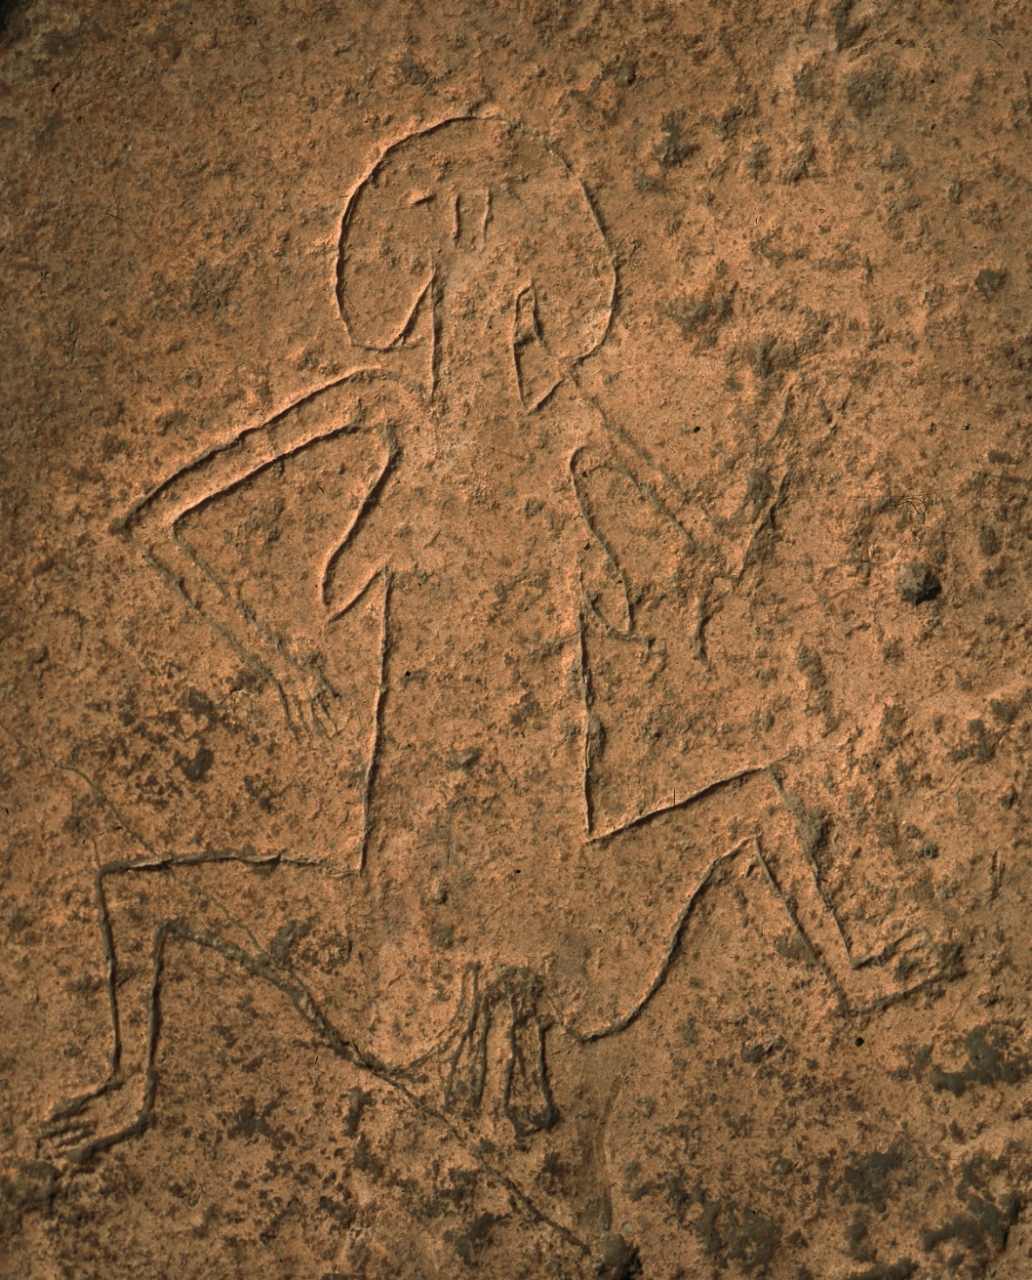 Was Göbekli Tepe really built by Aboriginal Australians? 3